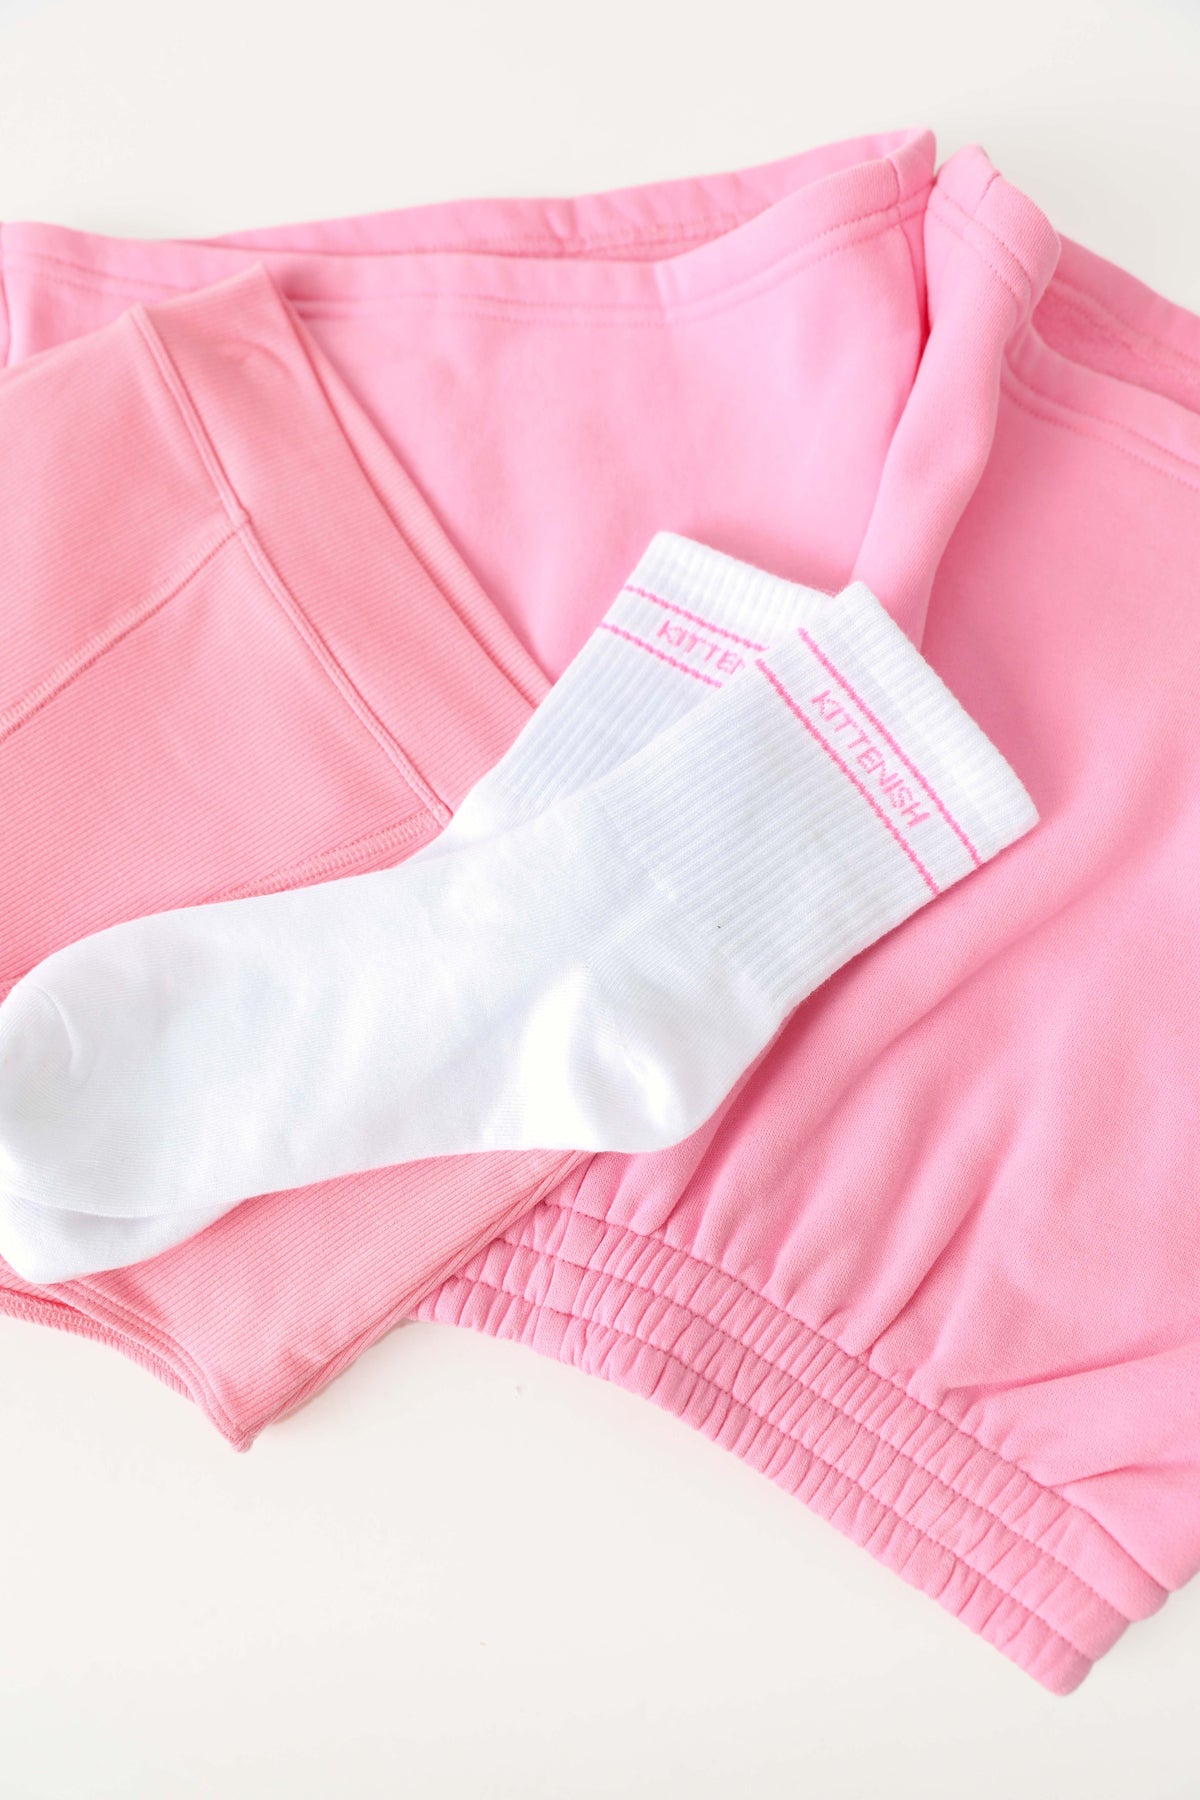 Pink logo Kittenish socks laying over Bubble Gum boy shorts and sweat short.